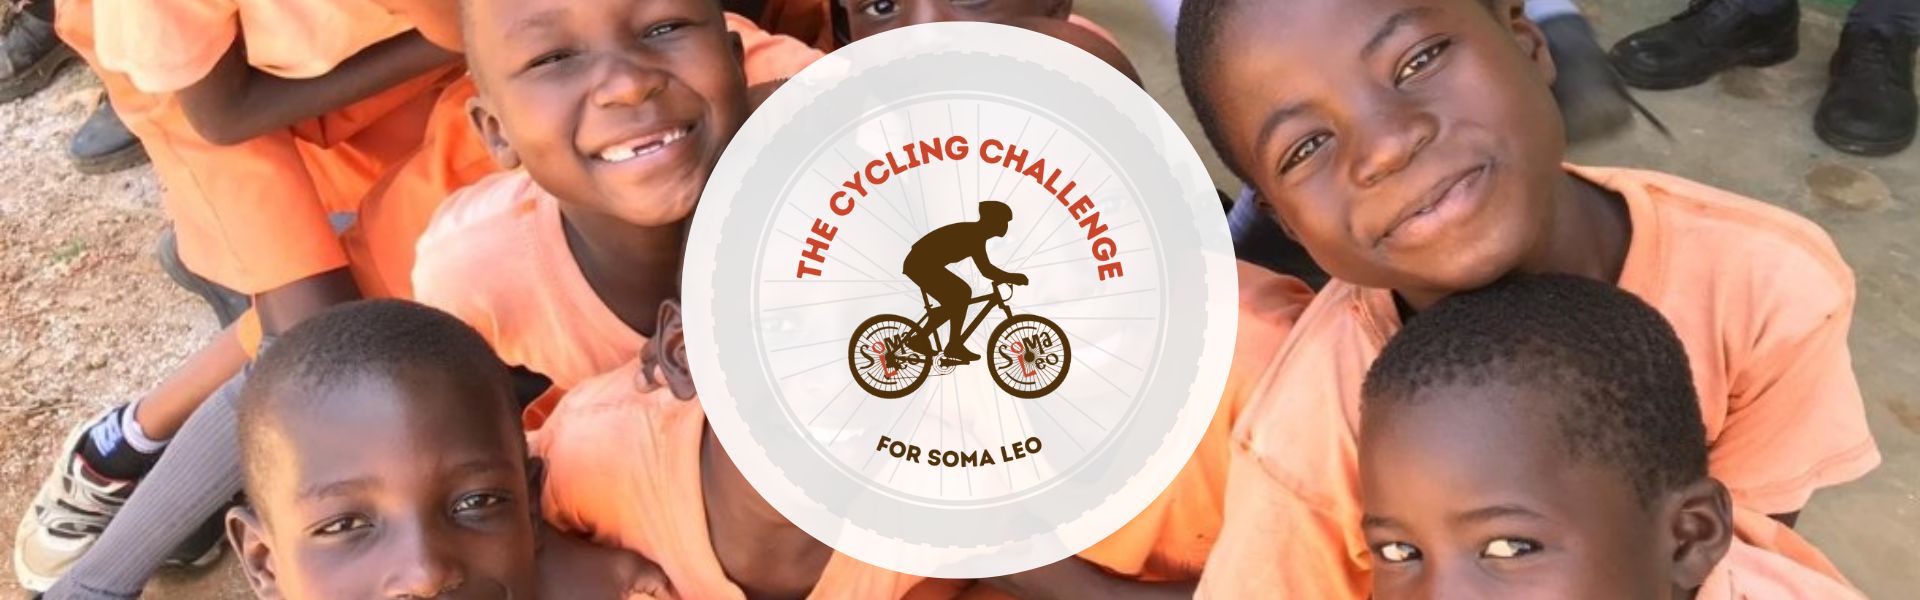 Pound Gates aims to raise £5,000 through The Cycling Challenge for Soma Leo